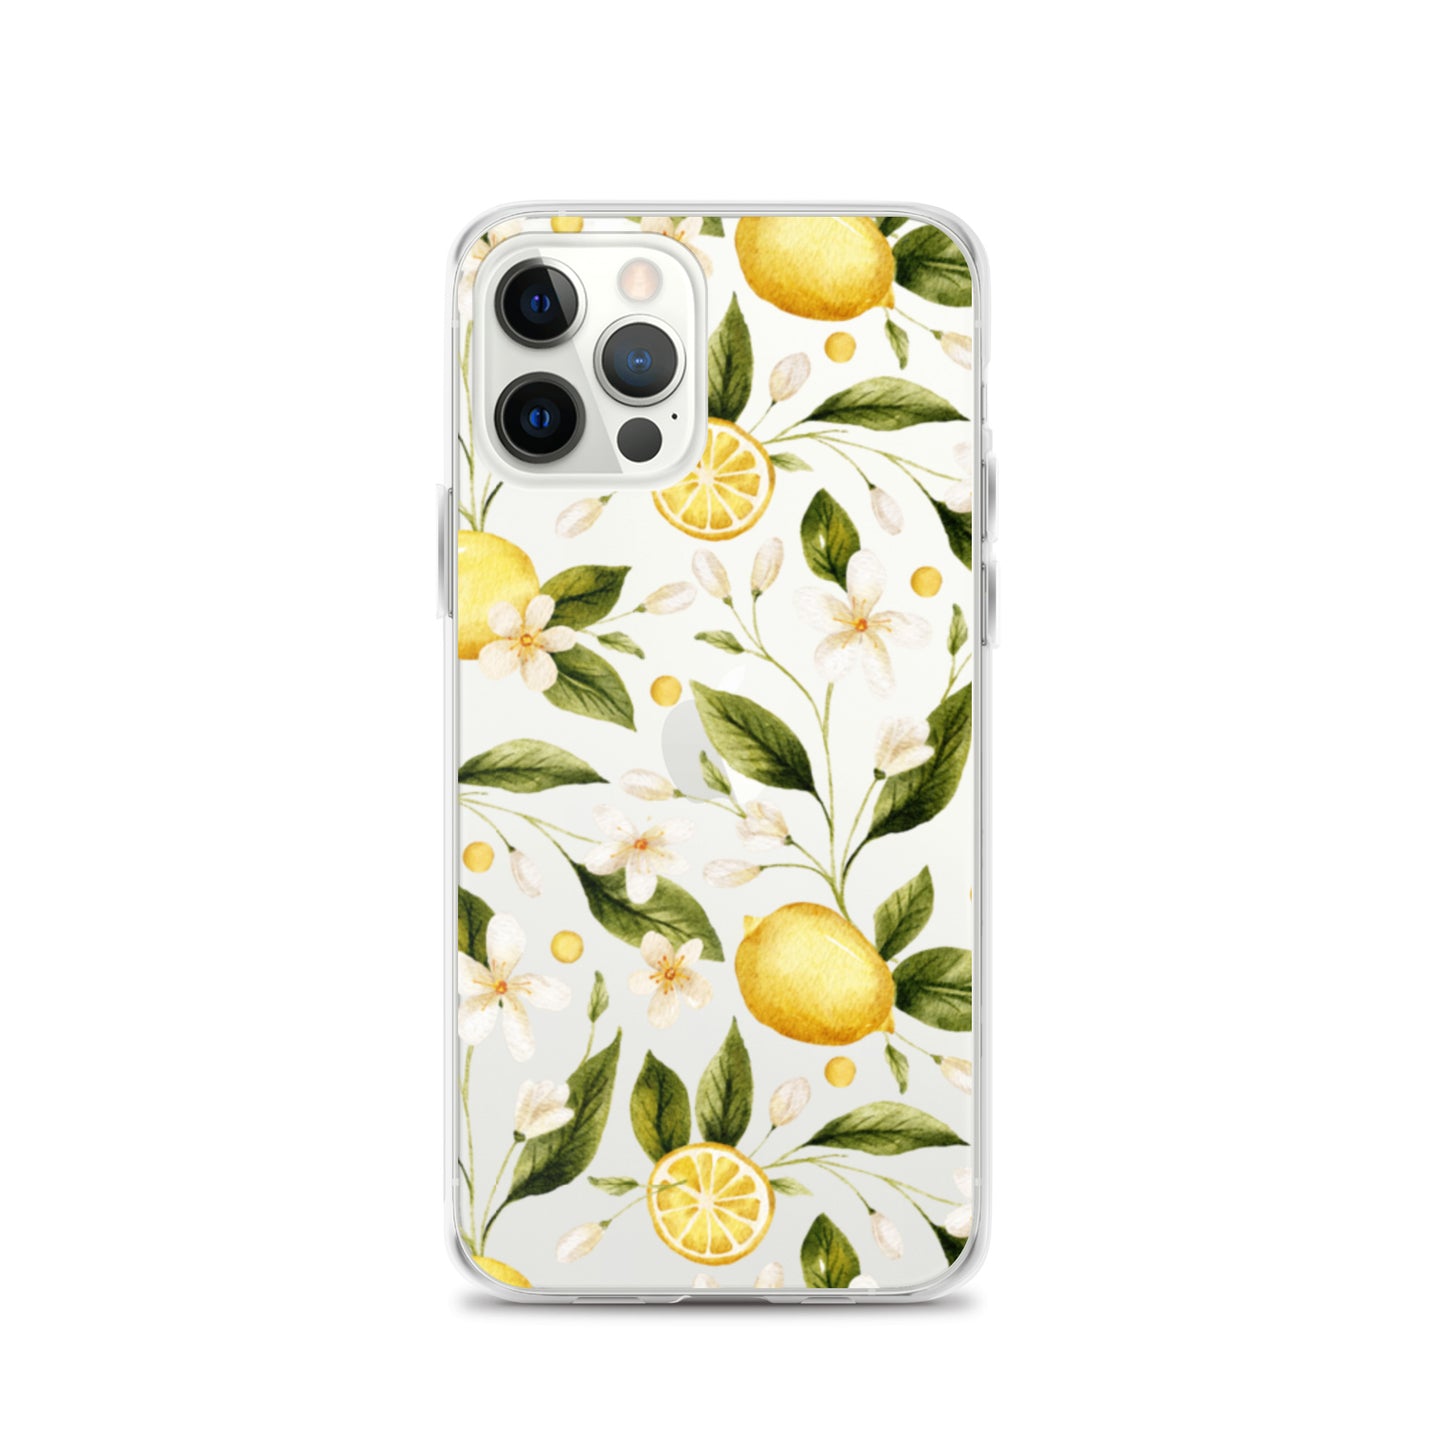 Lemon Garden Clear iPhone Case iPhone 12 Pro